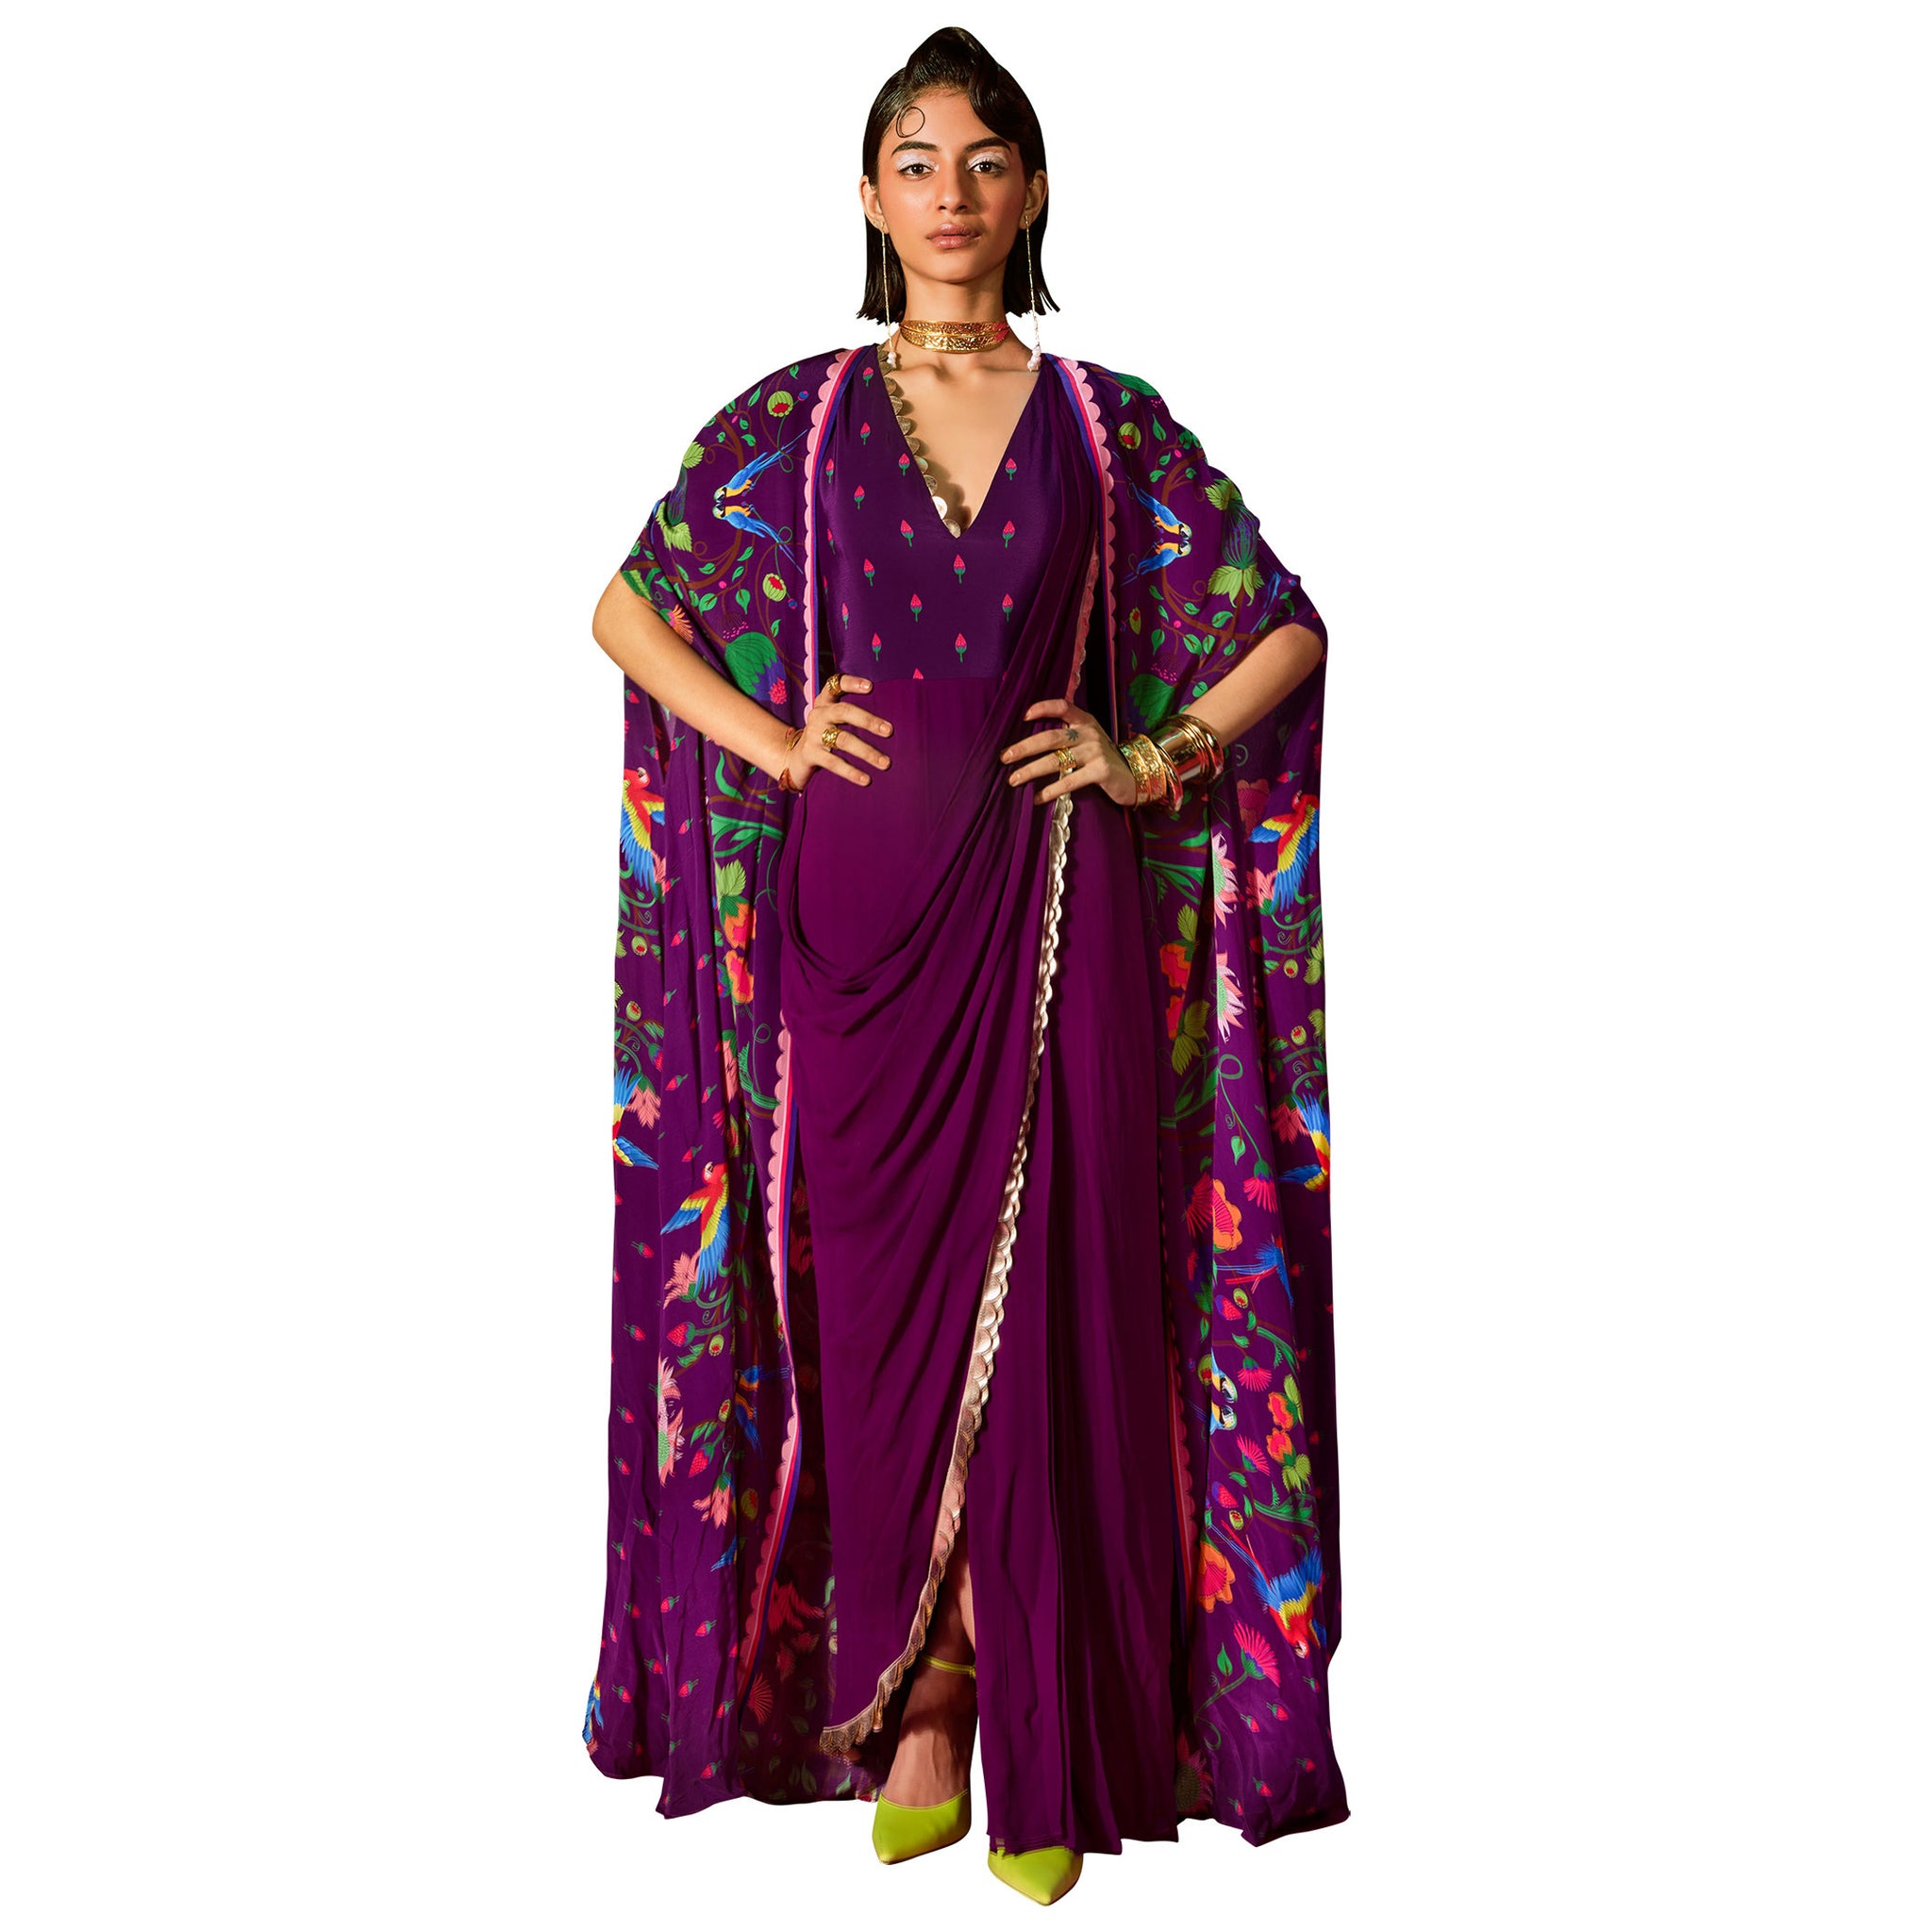 Embroidered Pre-Draped Sari with a Cape